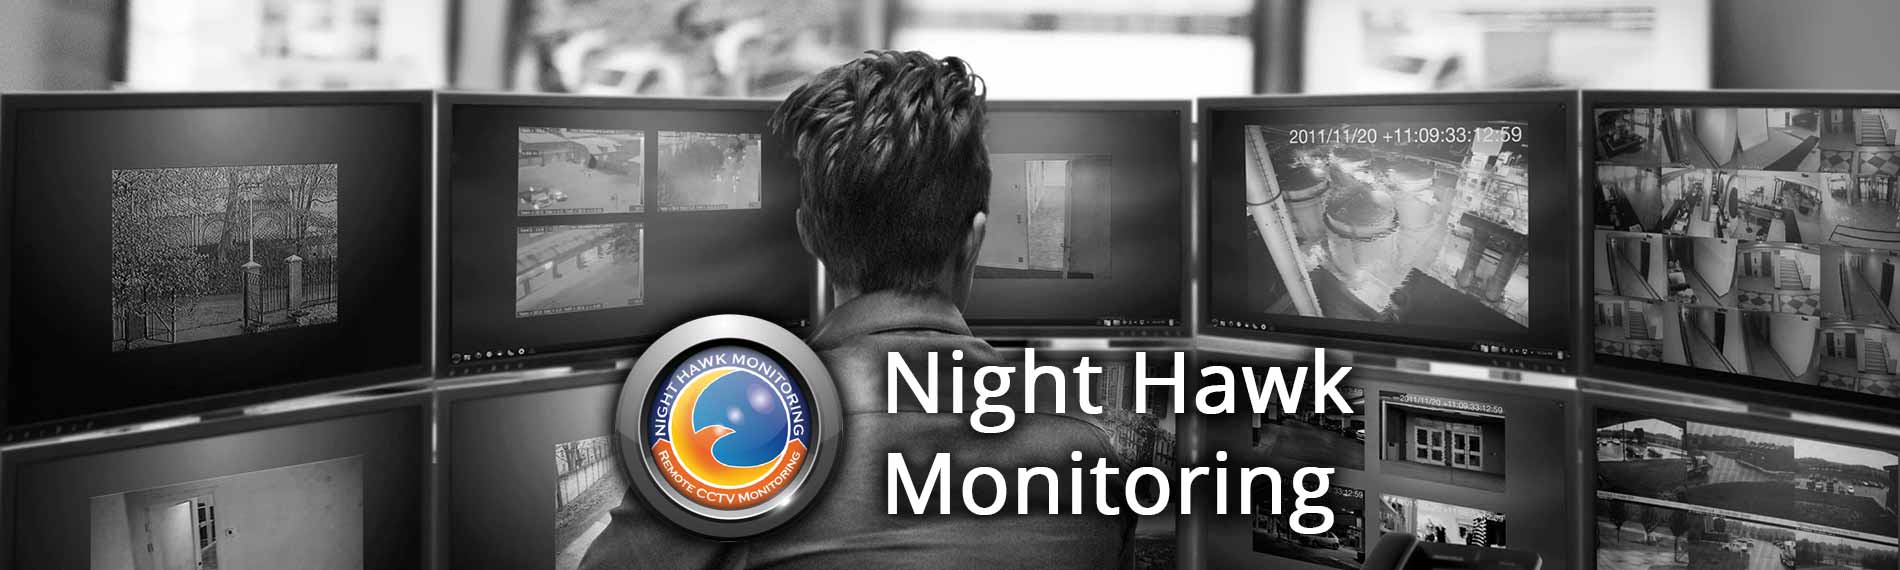 HANOVER REMOTE LIVE VIDEO SURVEILLANCE SECURITY CAMERAS MONITORING SYSTEM SERVICES COMPANY CCTV INSTALLATION HANOVER MARYLAND